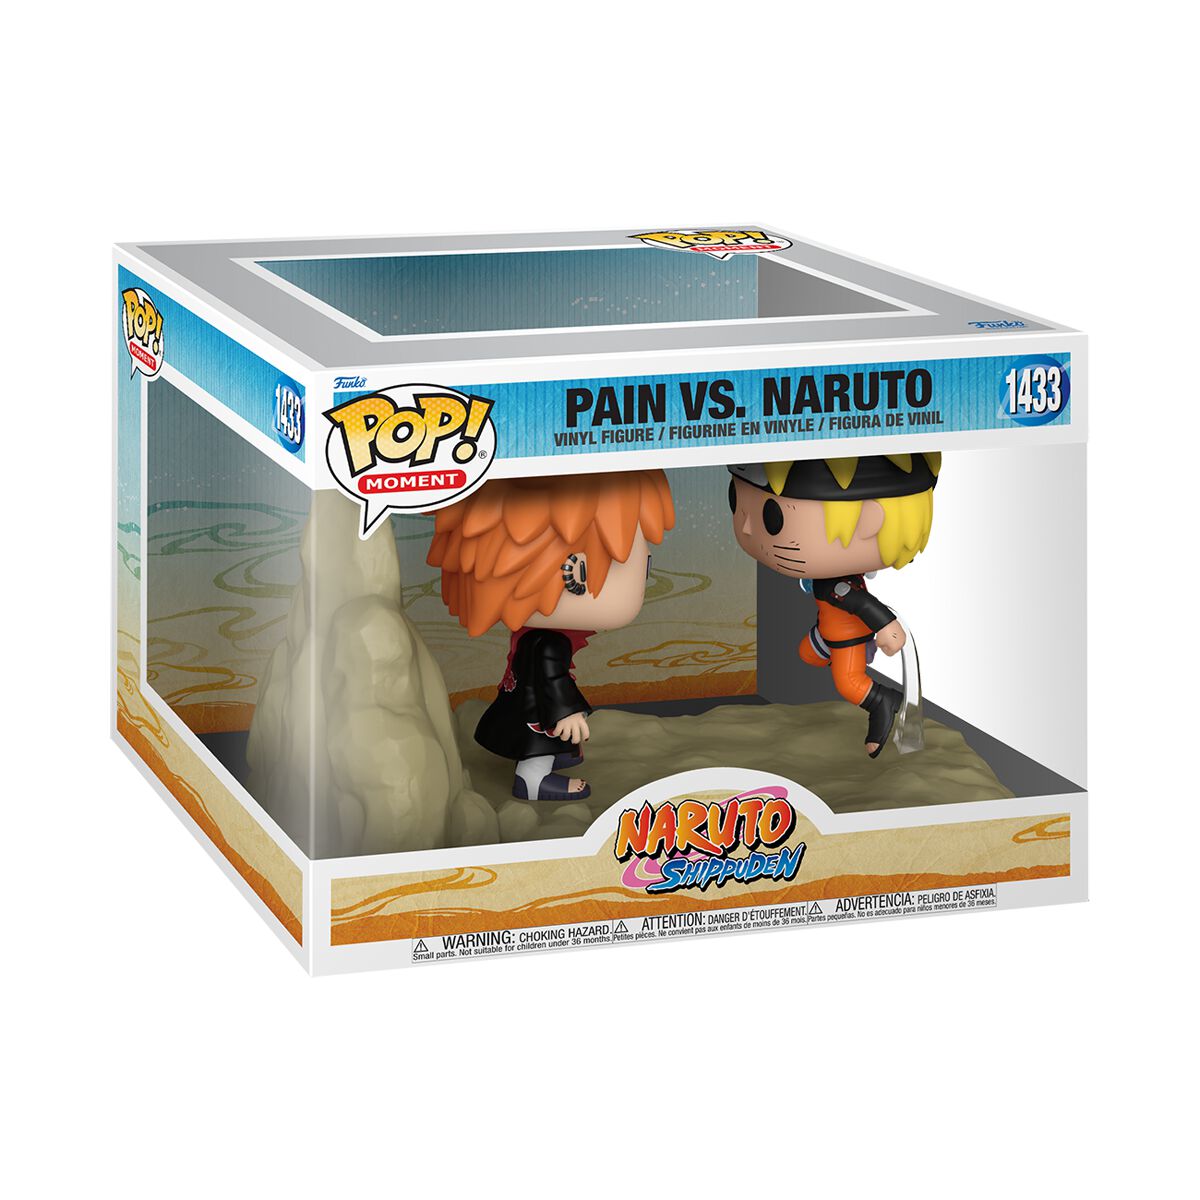 Image of Naruto - Pain vs. Naruto (Pop! Moment) vinyl figurine no. 1433 - Funko Pop! - Funko Shop Europe